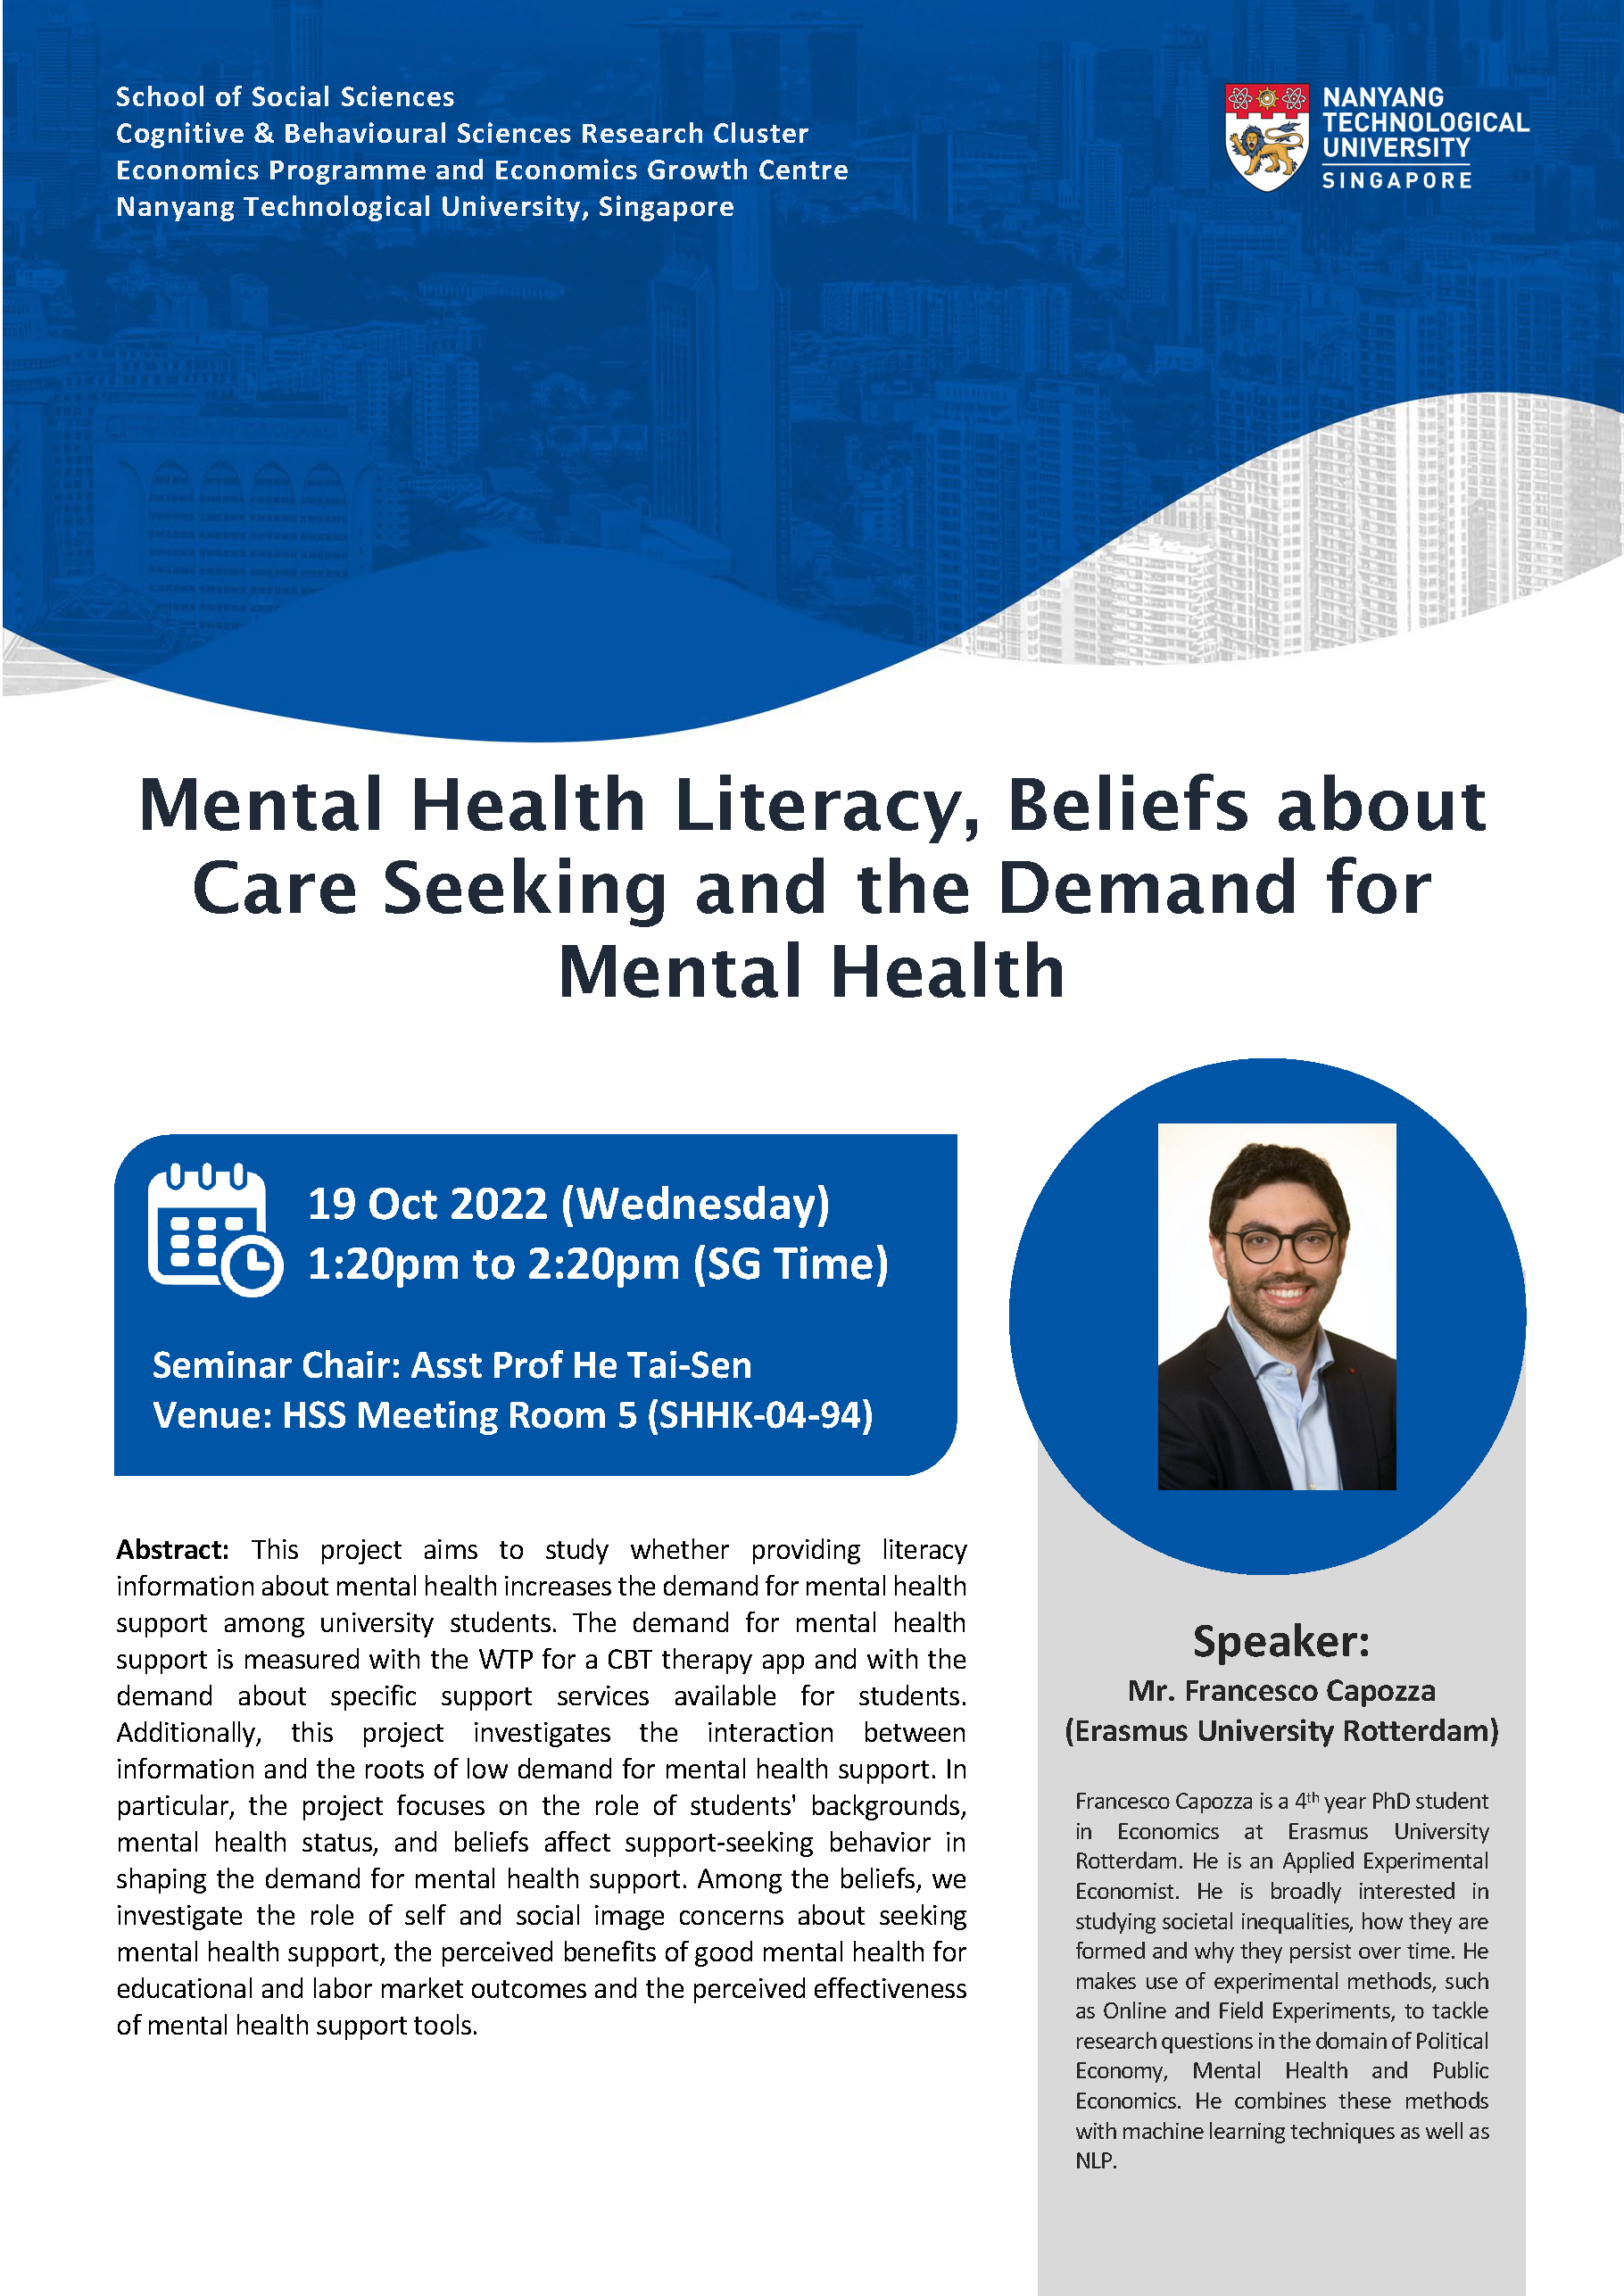 Mental Health Literacy, Beliefs about Care Seeking, Demand for Mental Health